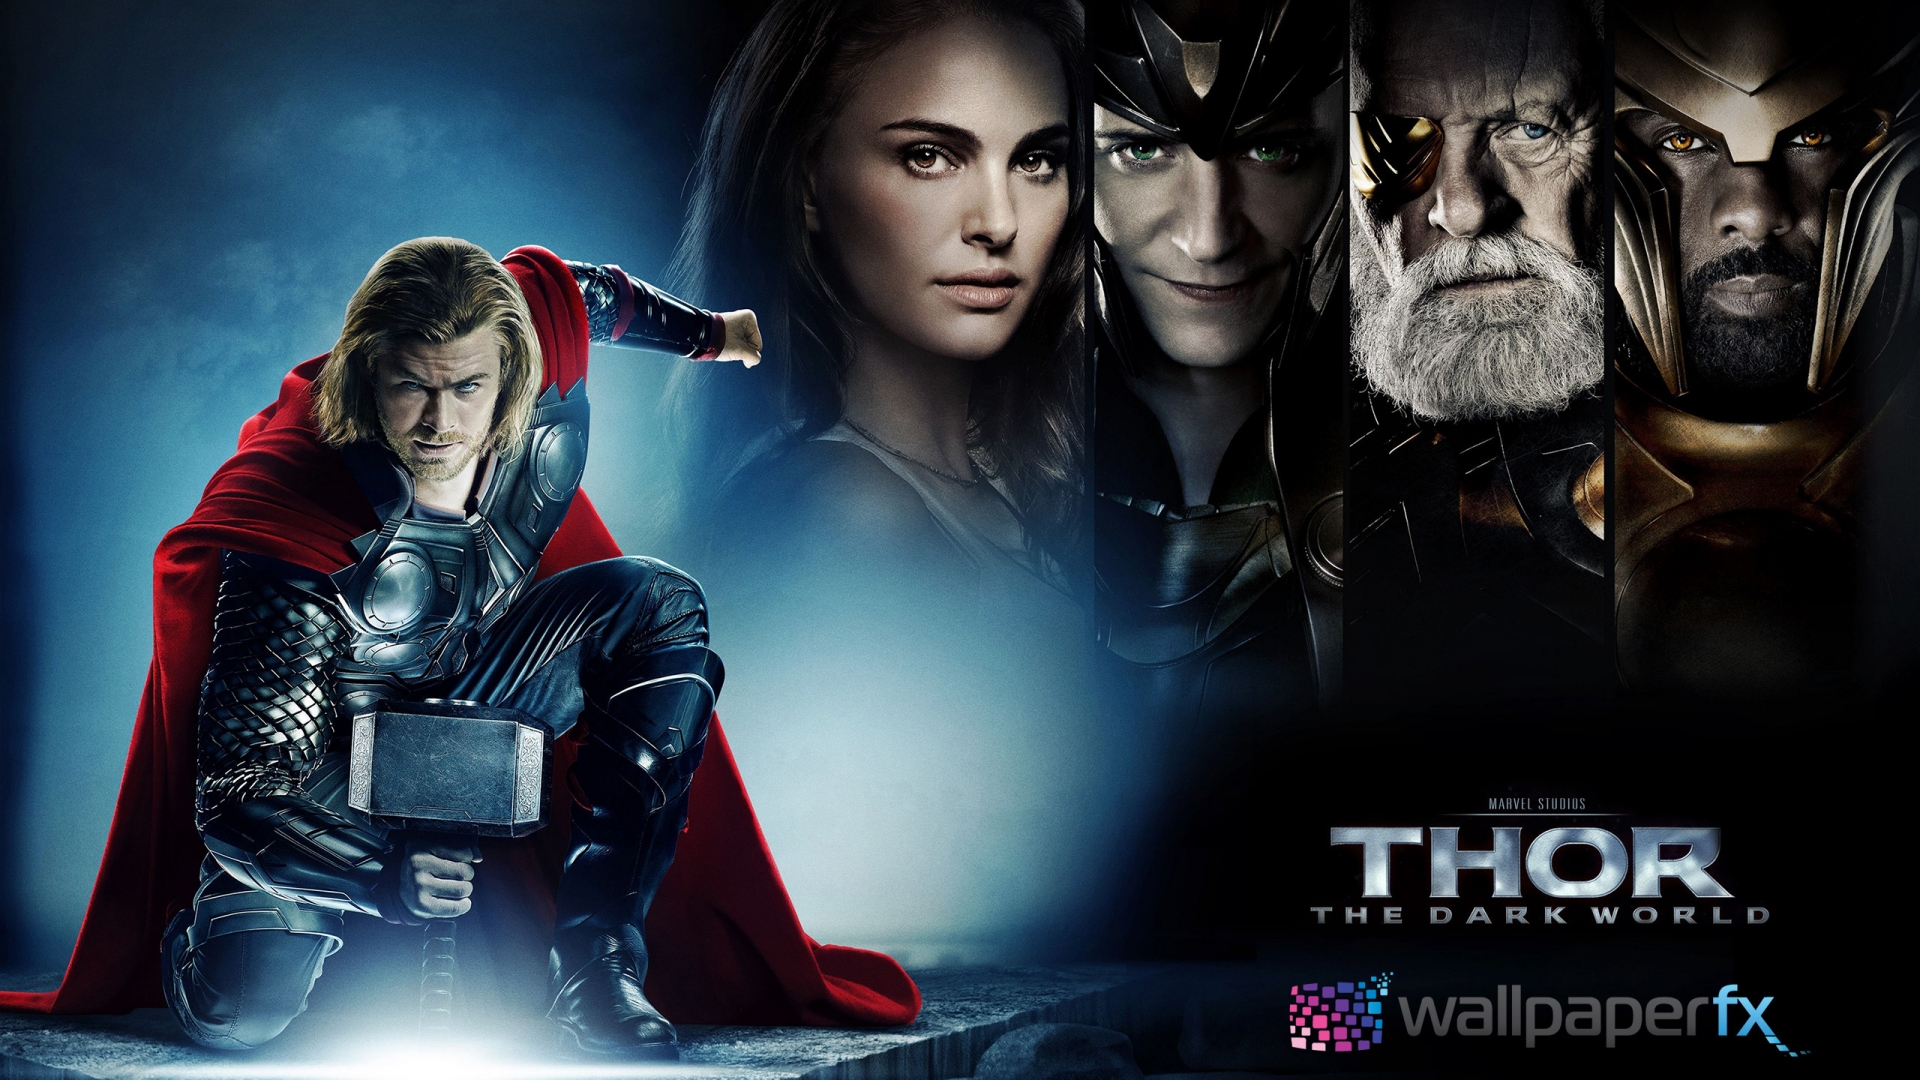 Thor The Dark World for 1920 x 1080 HDTV 1080p resolution